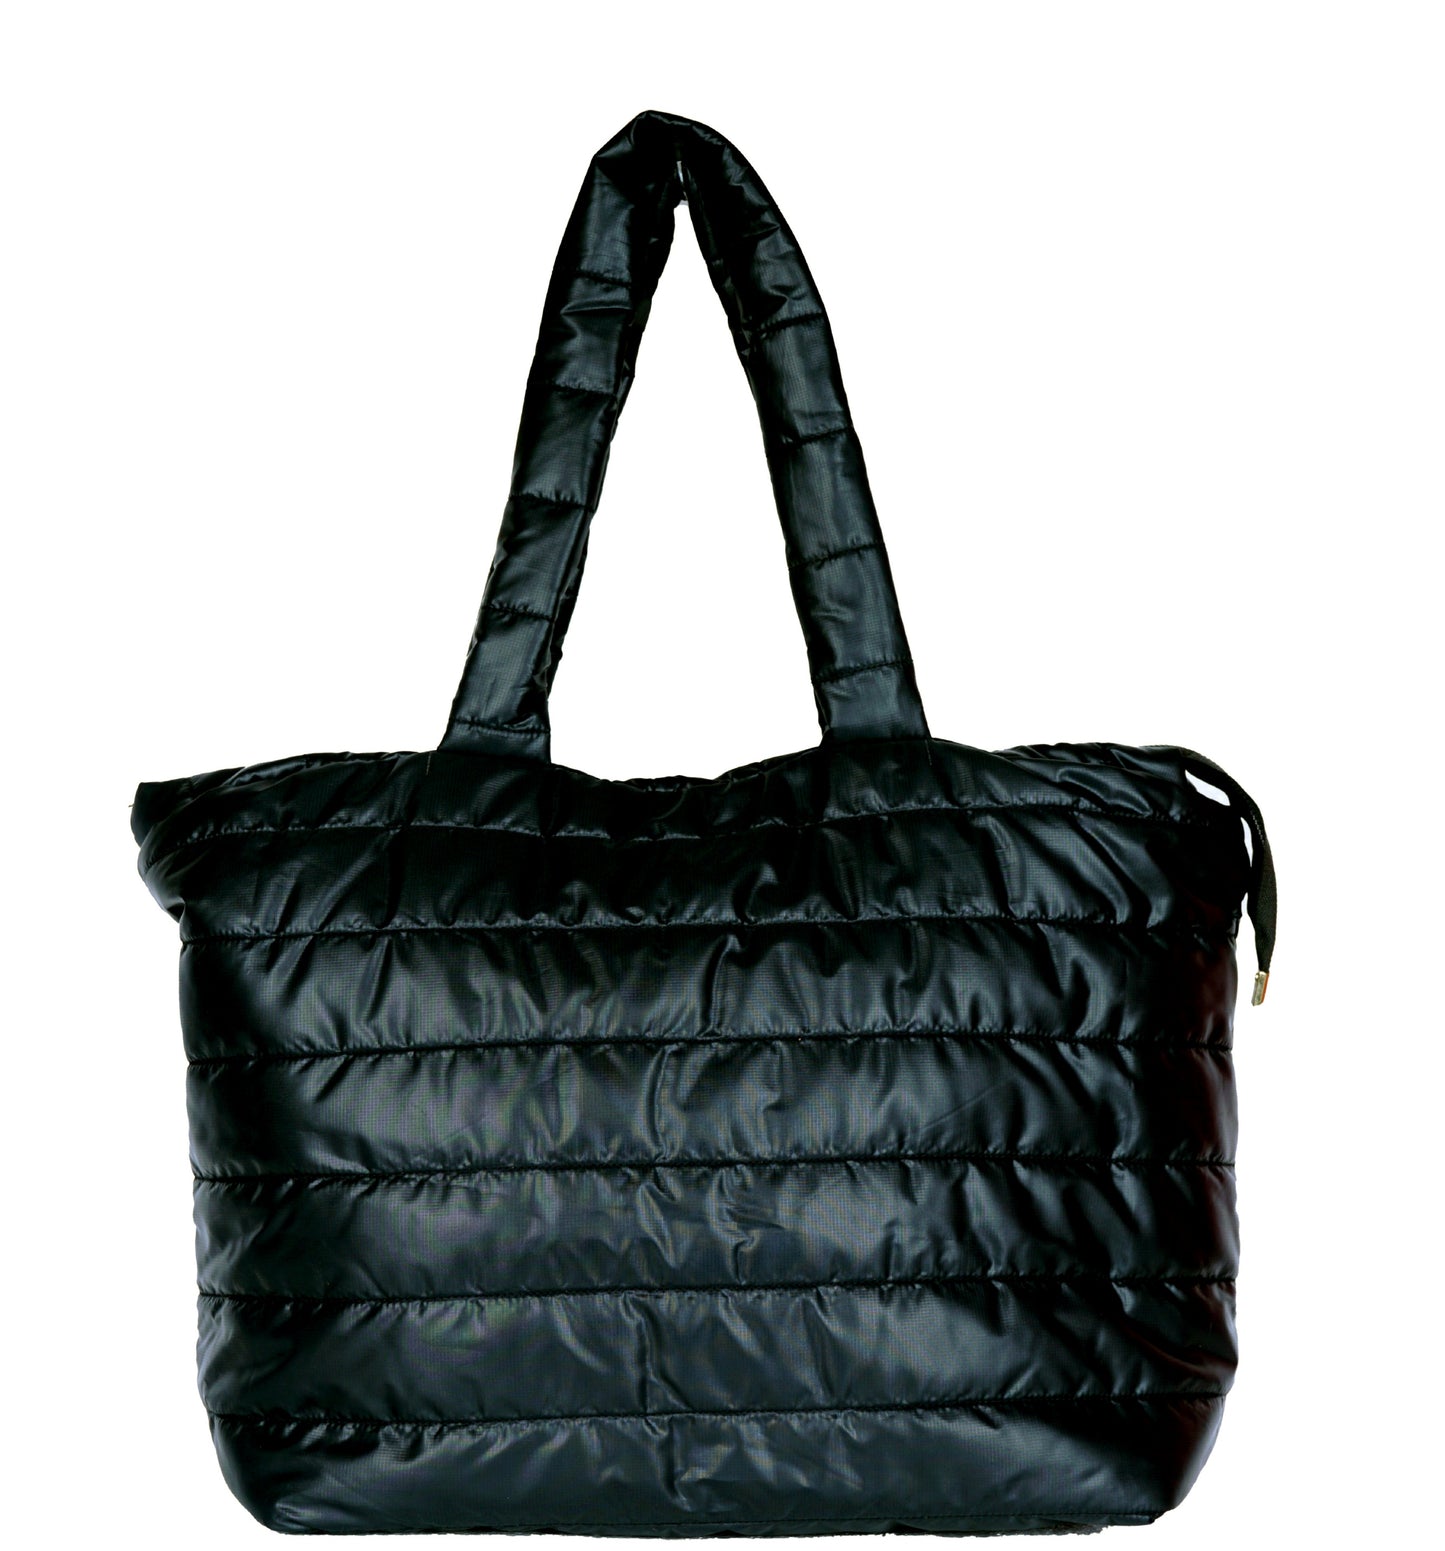 Jade Black Bag